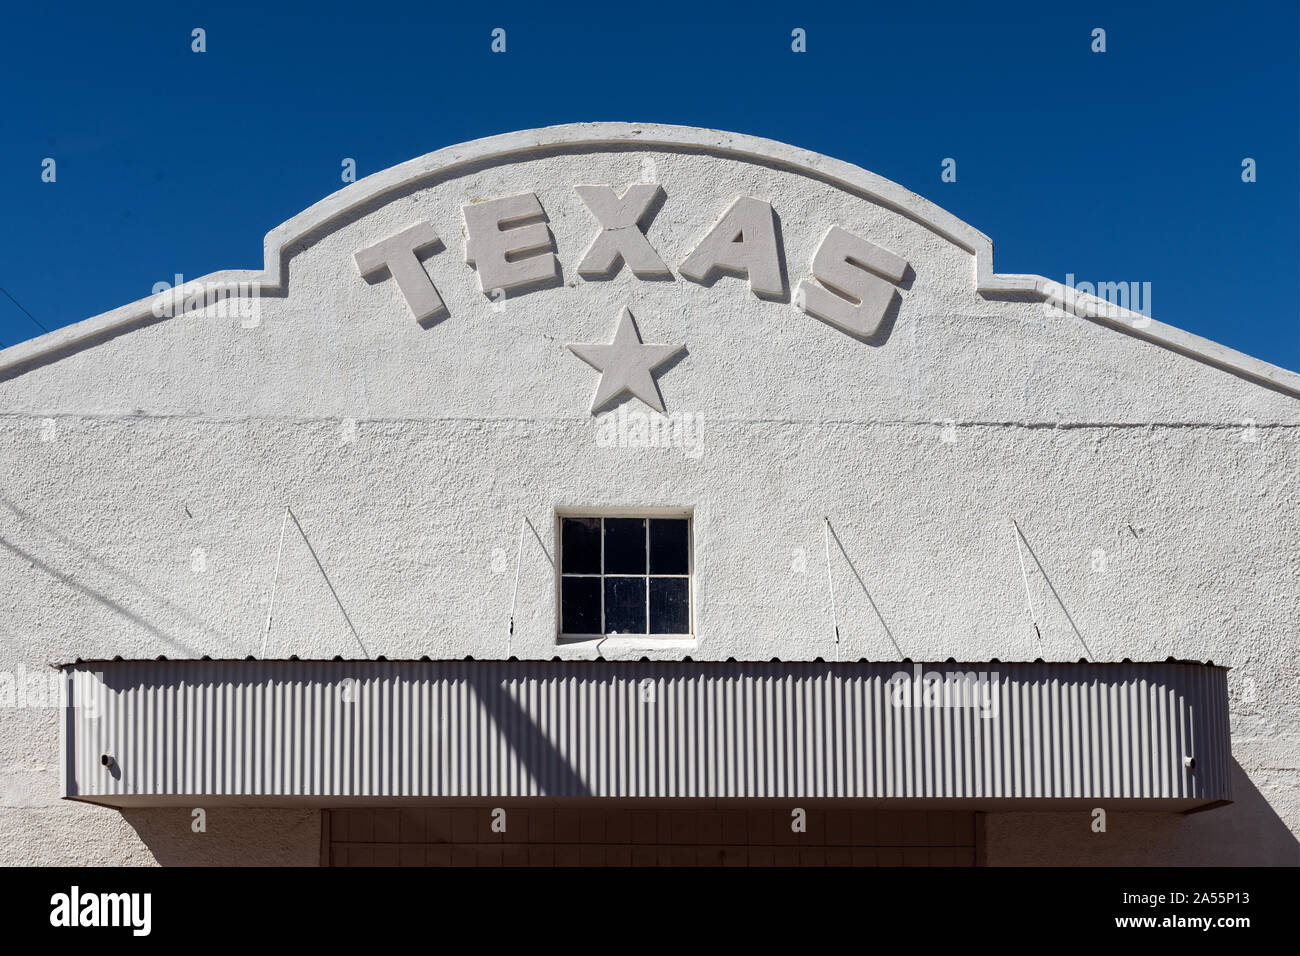 Upper facade of the Texas Theatre in Marfa, Texas Stock Photo